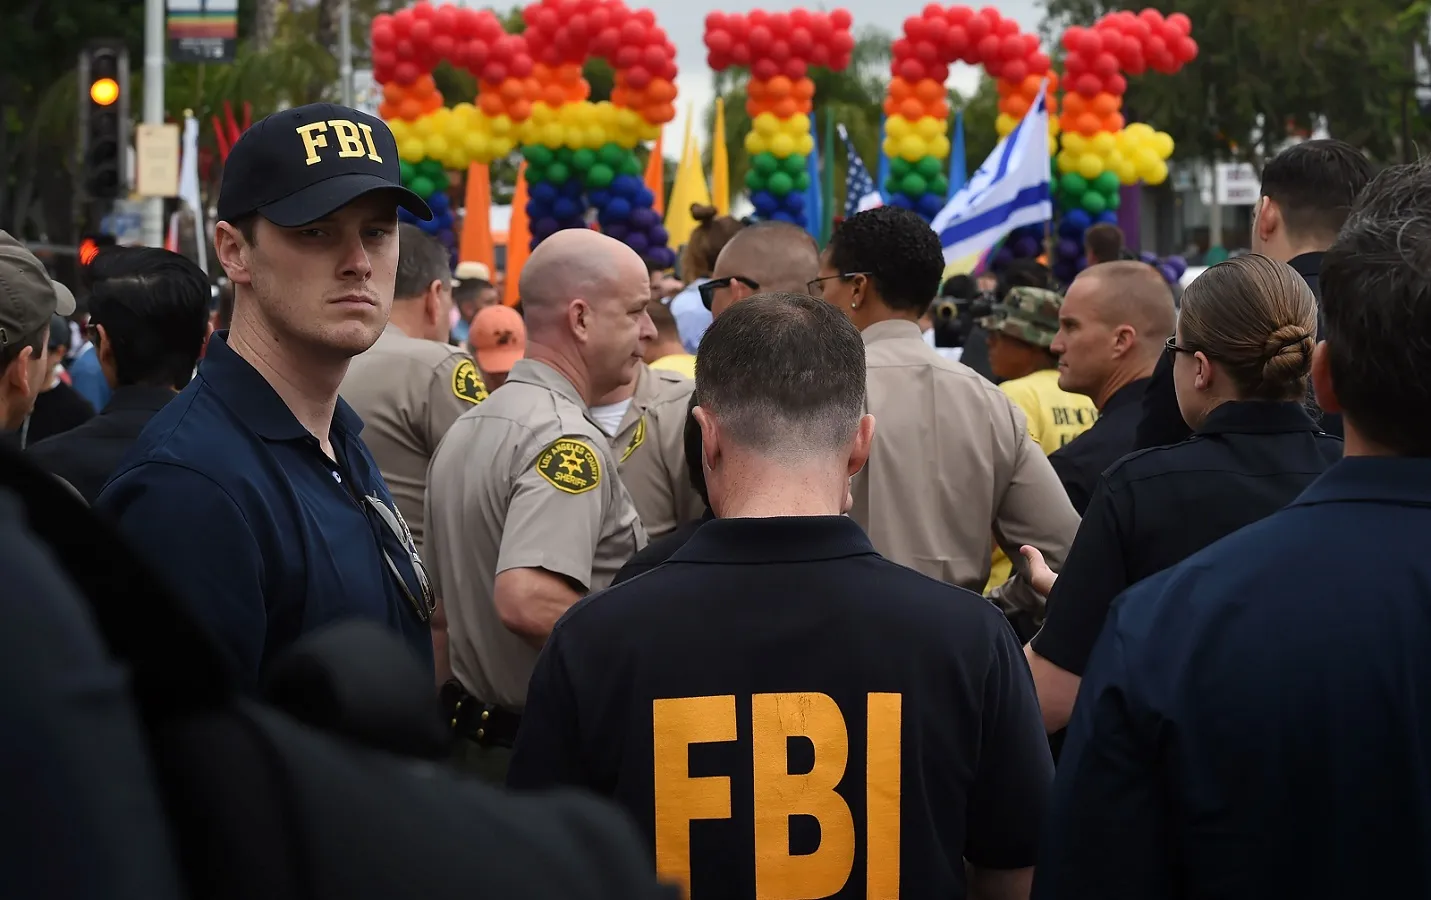 New report reveals Police ‘losing trust’ in FBI